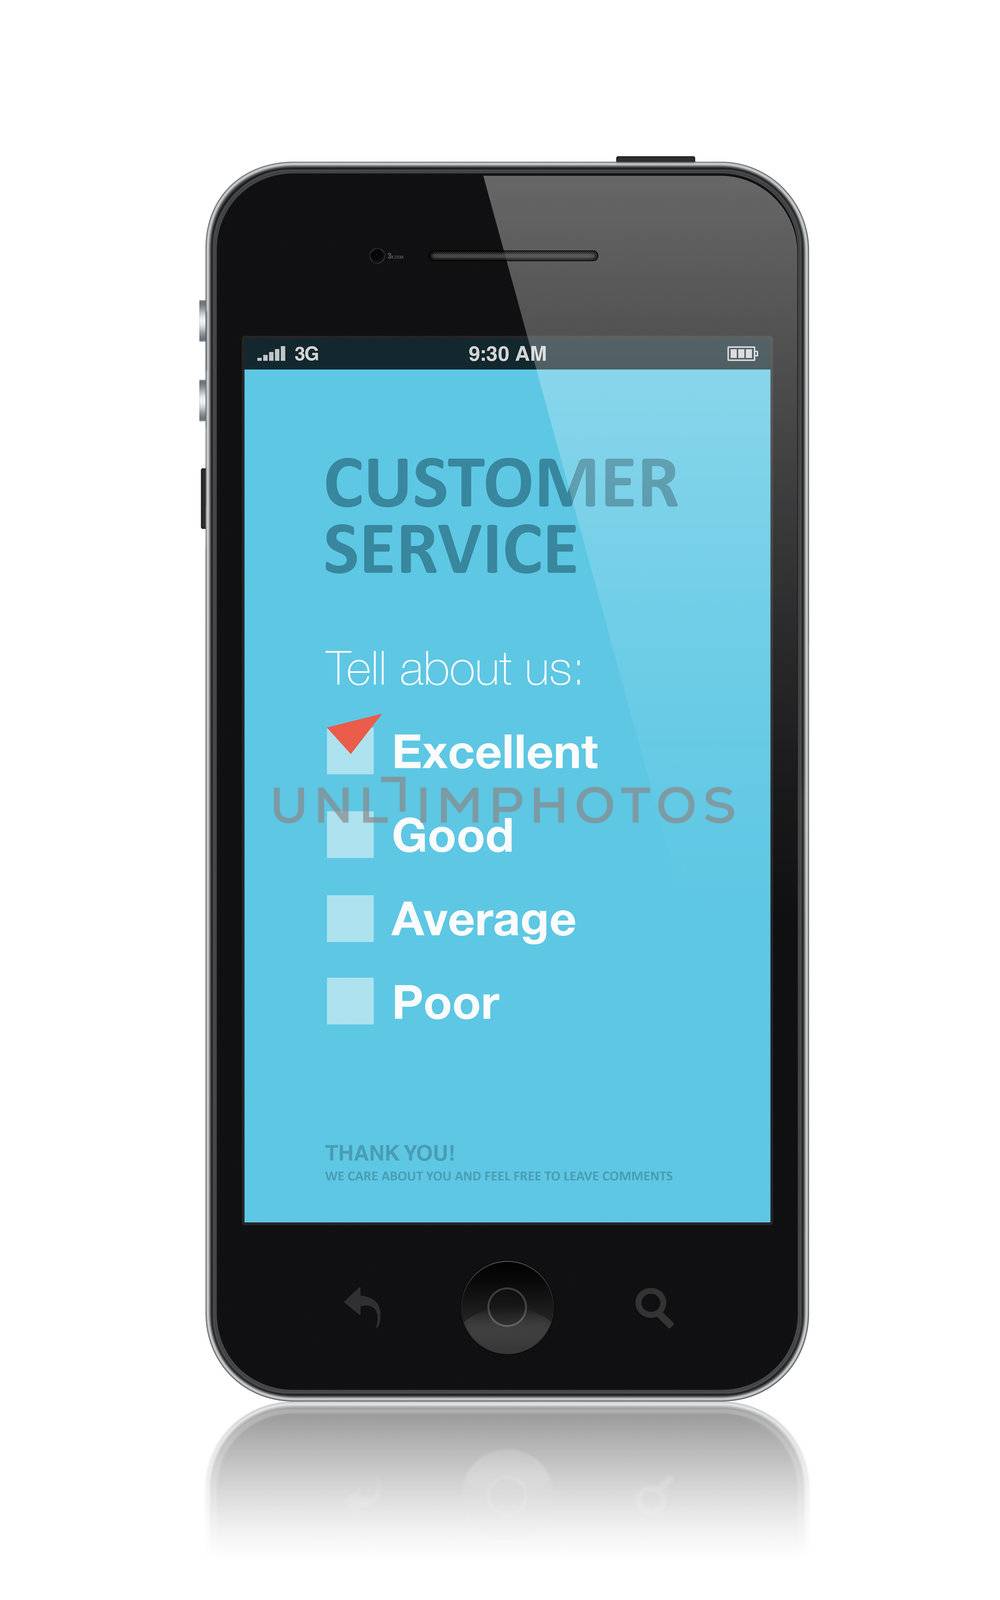 Customer service survey application by bloomua